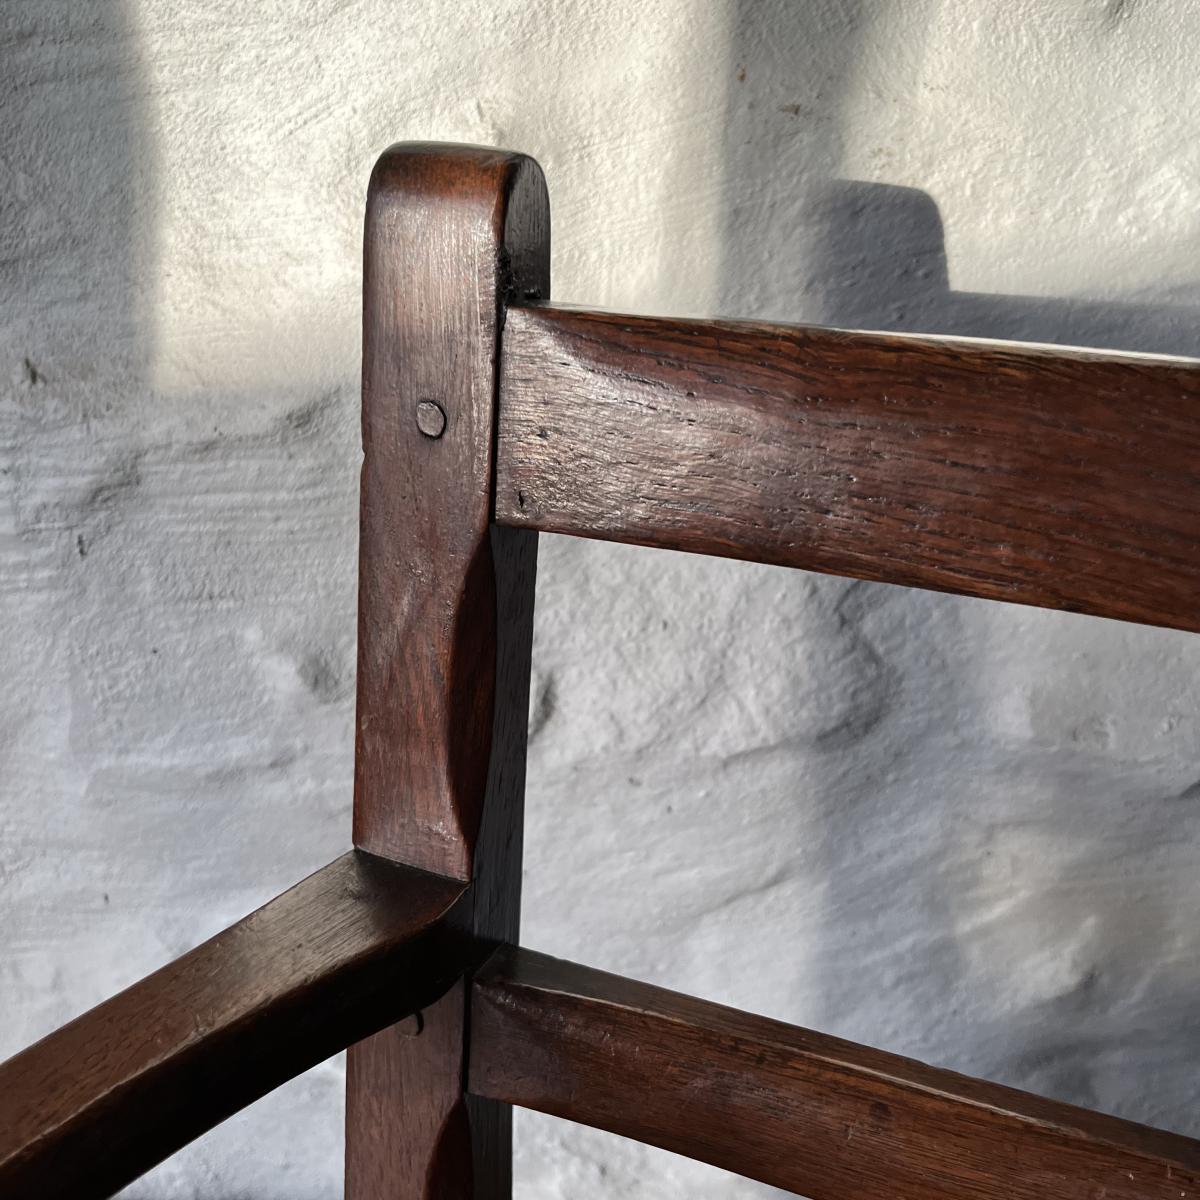 Welsh oak child’s chair